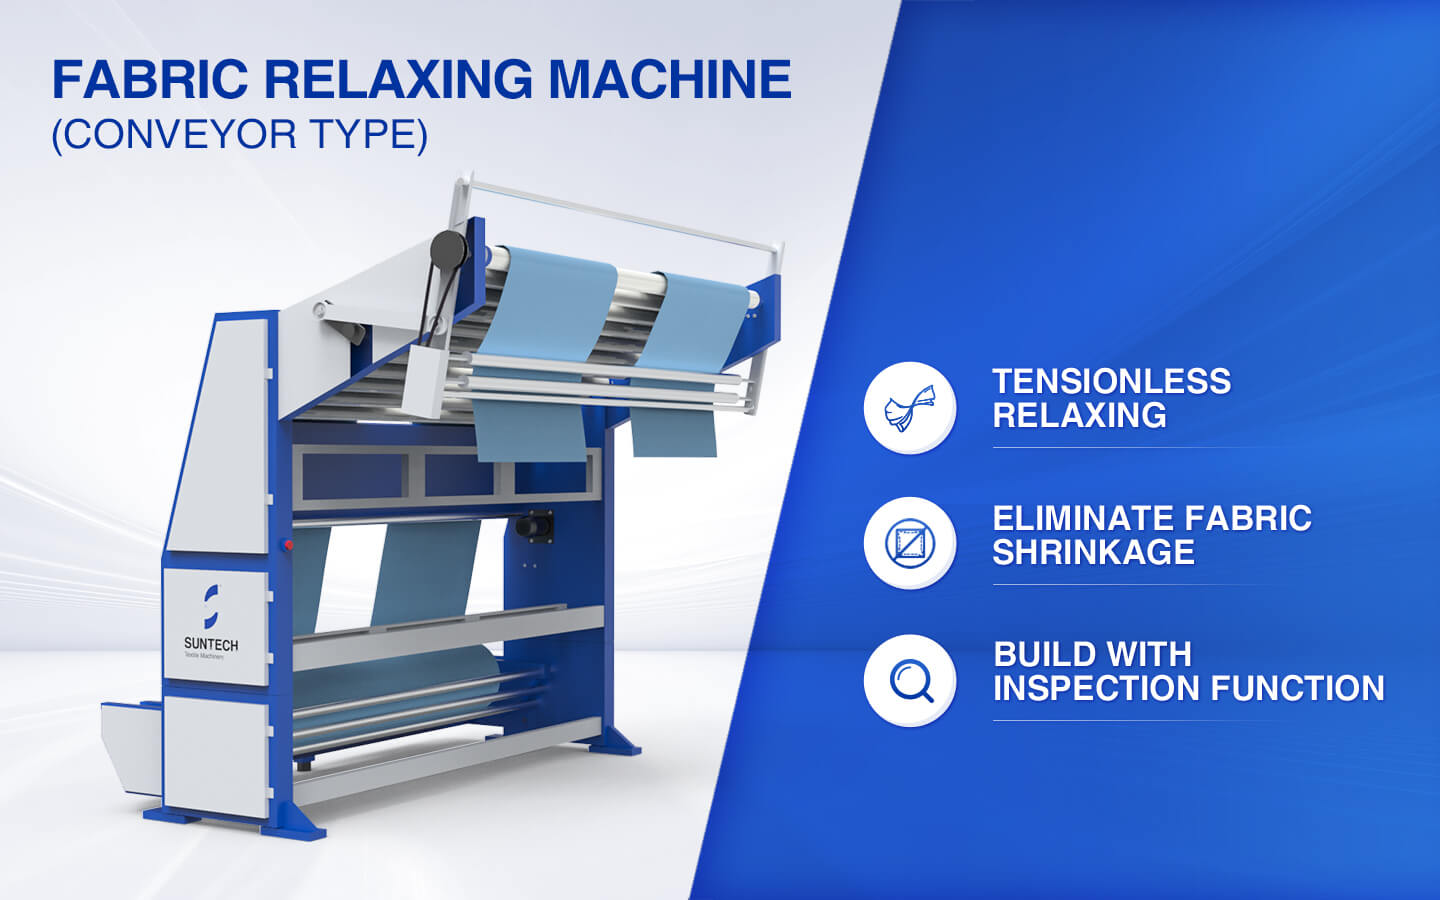 fabric relaxing machine conveyor type features